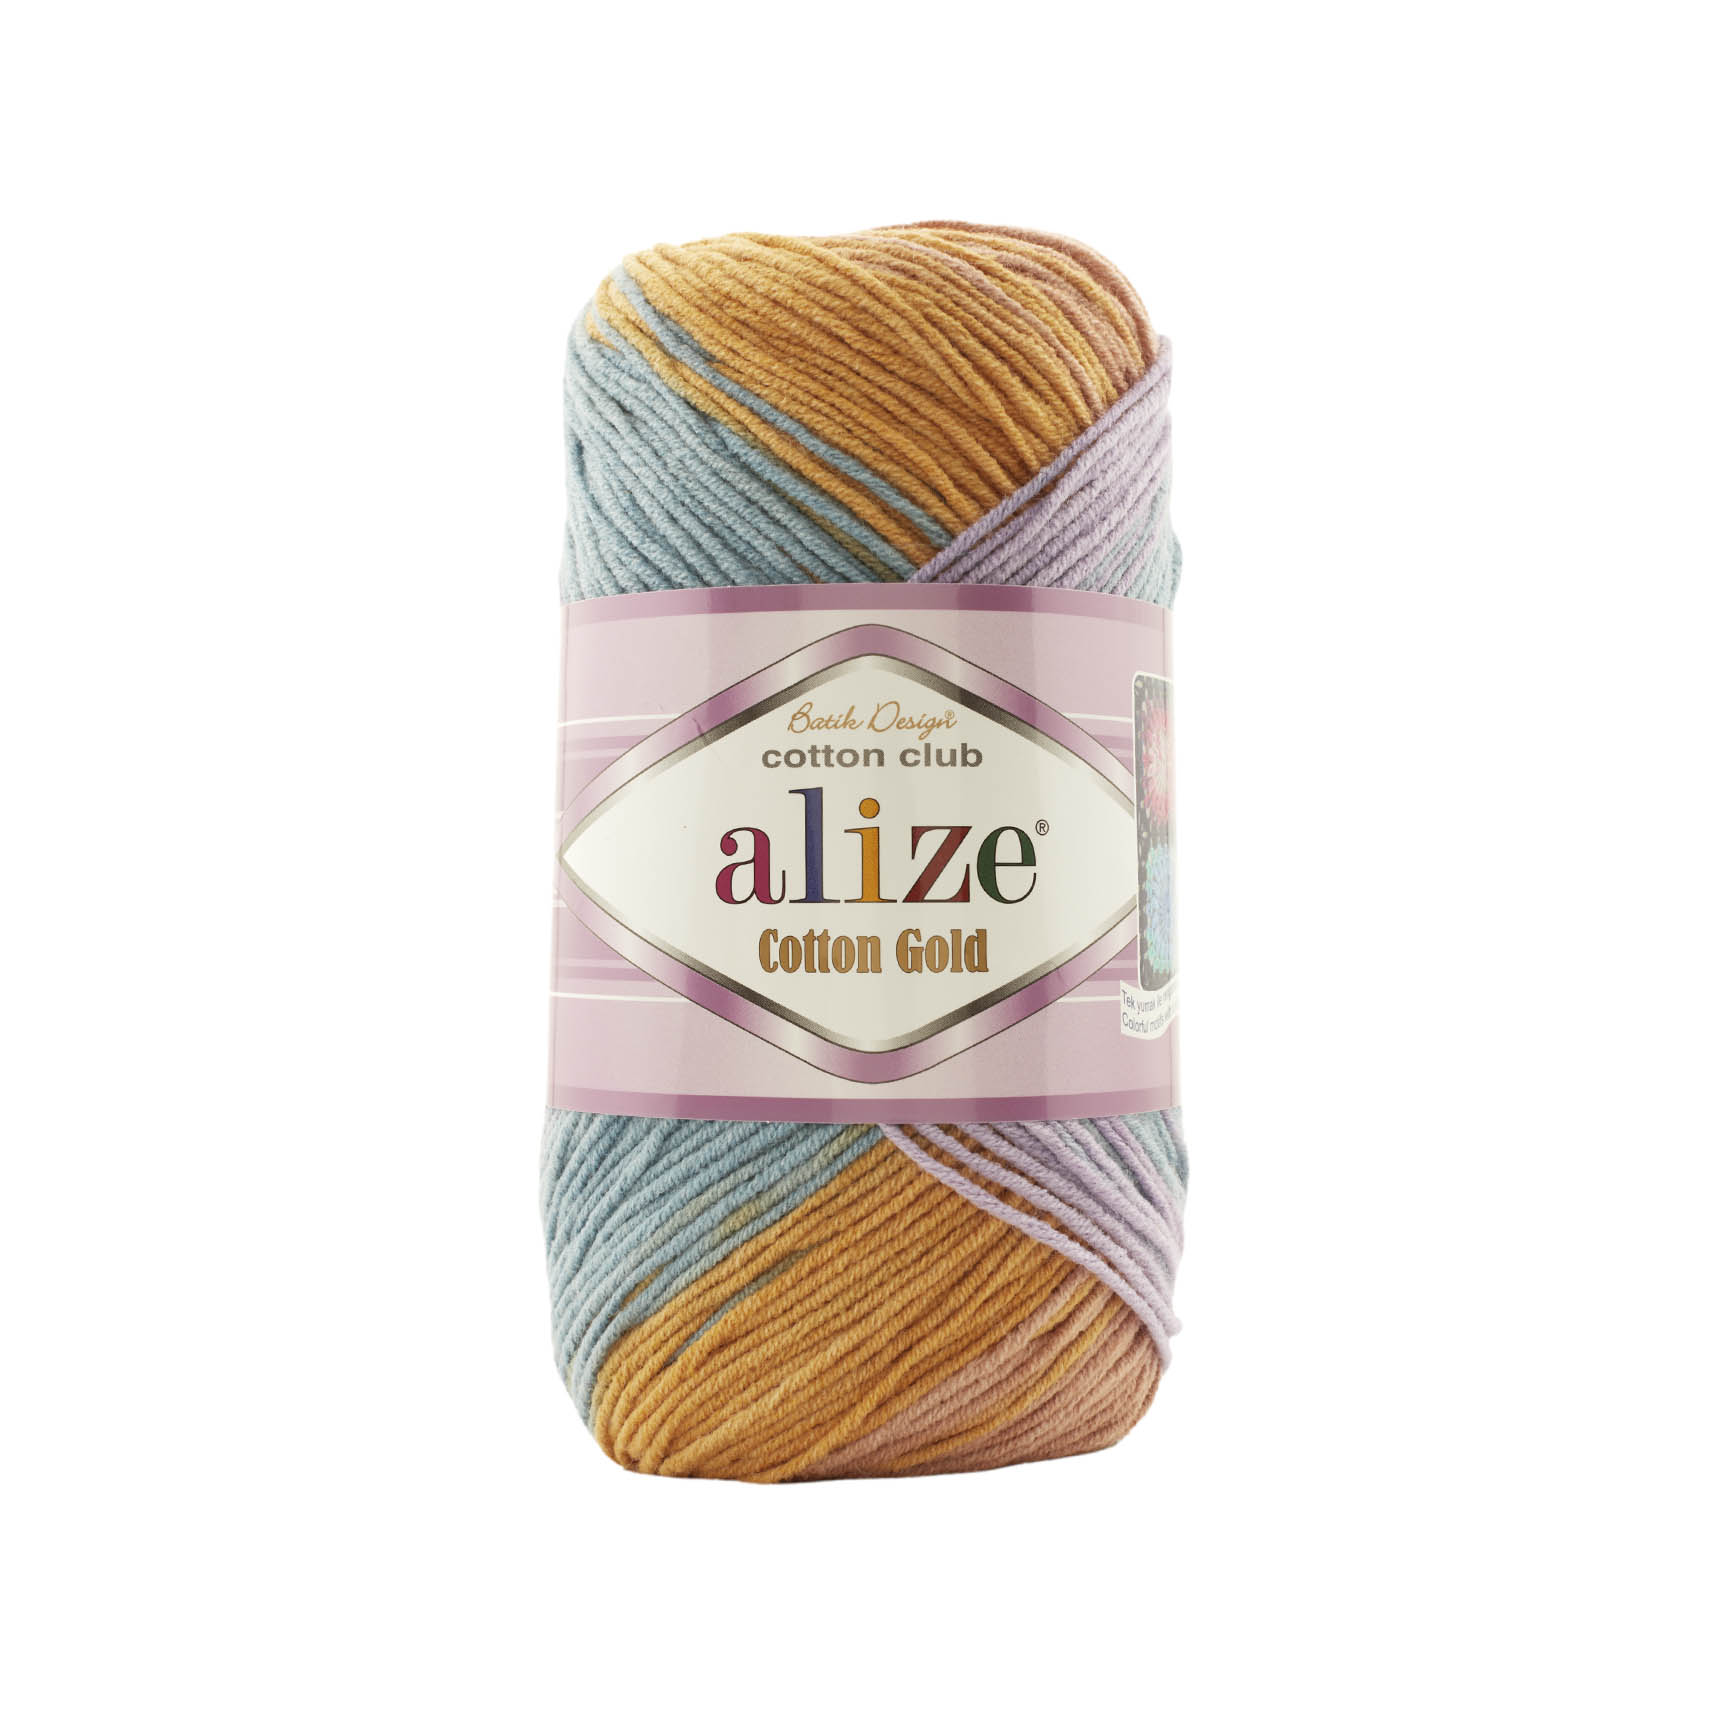 Alize COTTON GOLD BATIK Cotton Yarn Gradient Yarn Acrylic Yarn